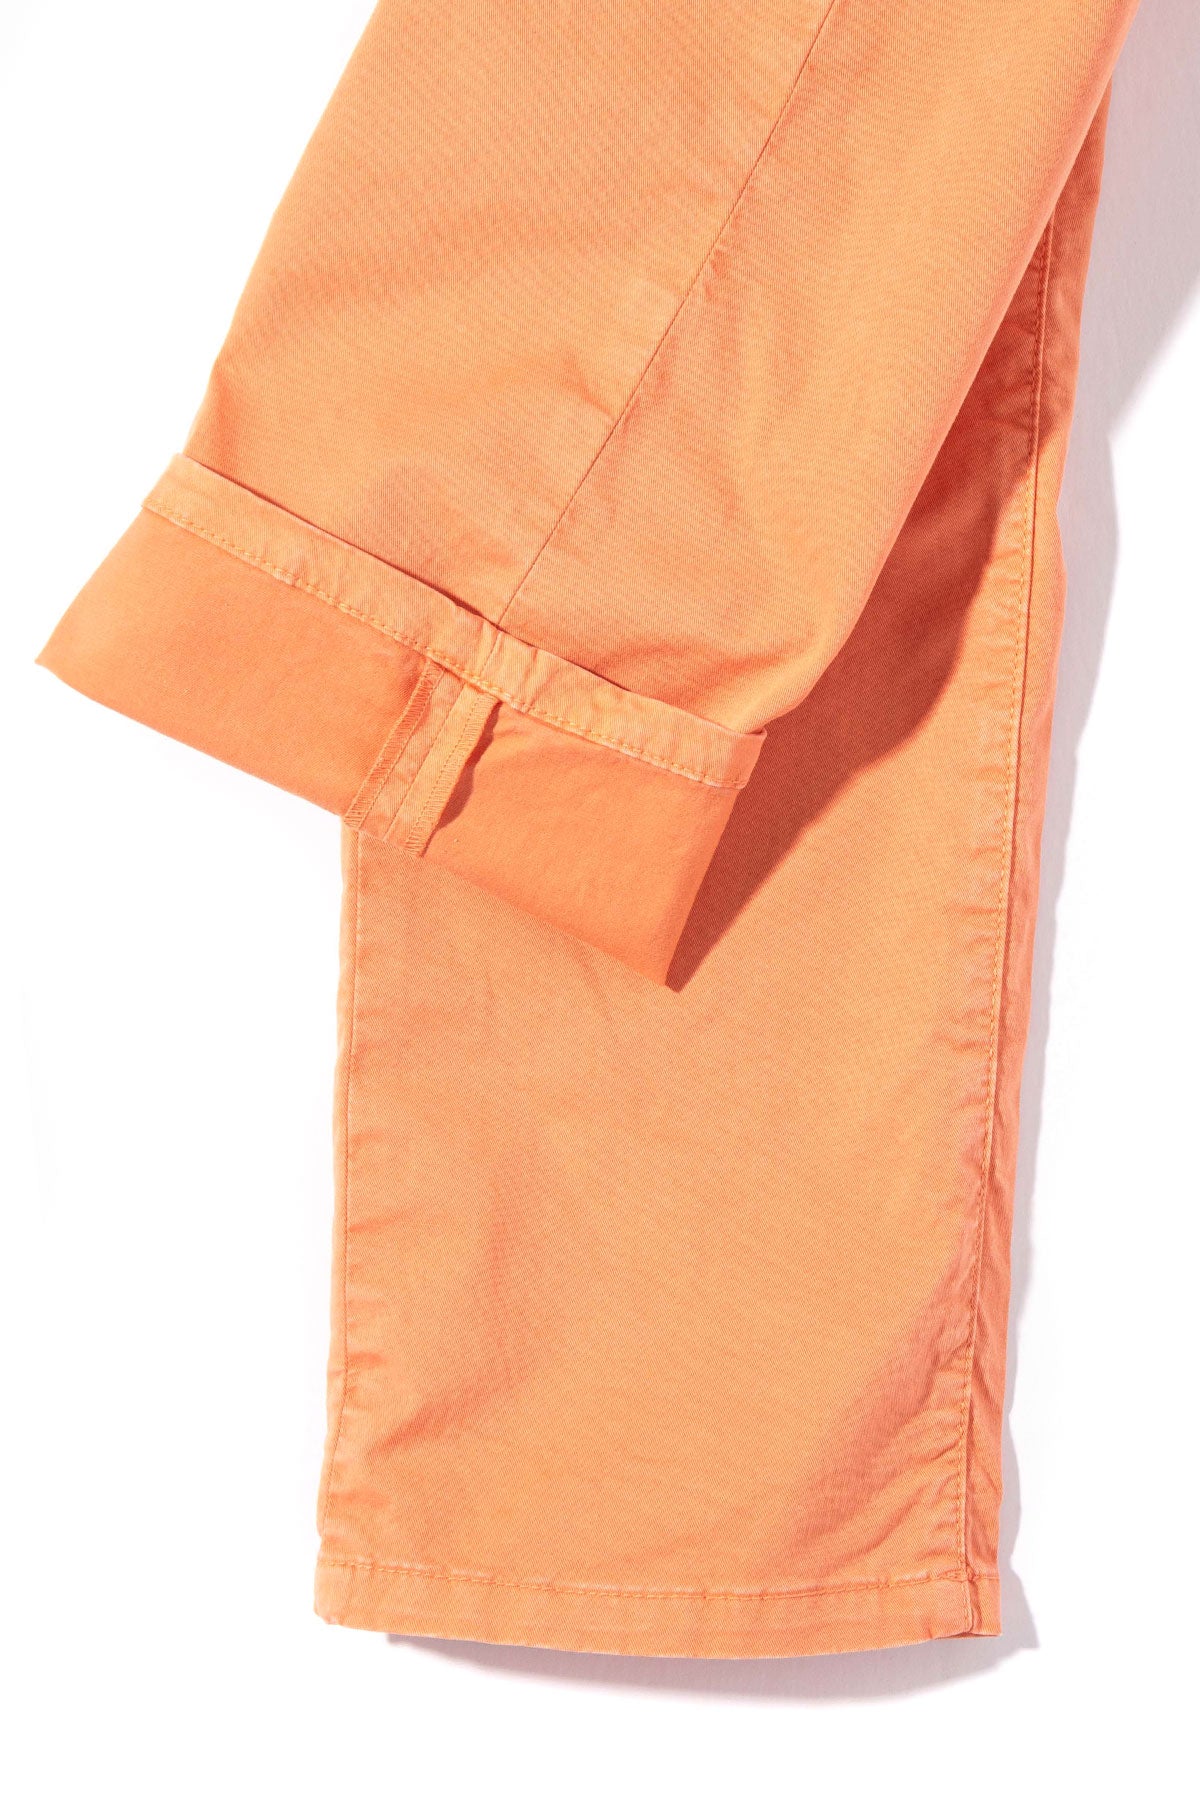 Flagstaff Stretch Cotton Twill in Tangerine | Mens - Pants - 5 Pocket | Axels Premium Denim